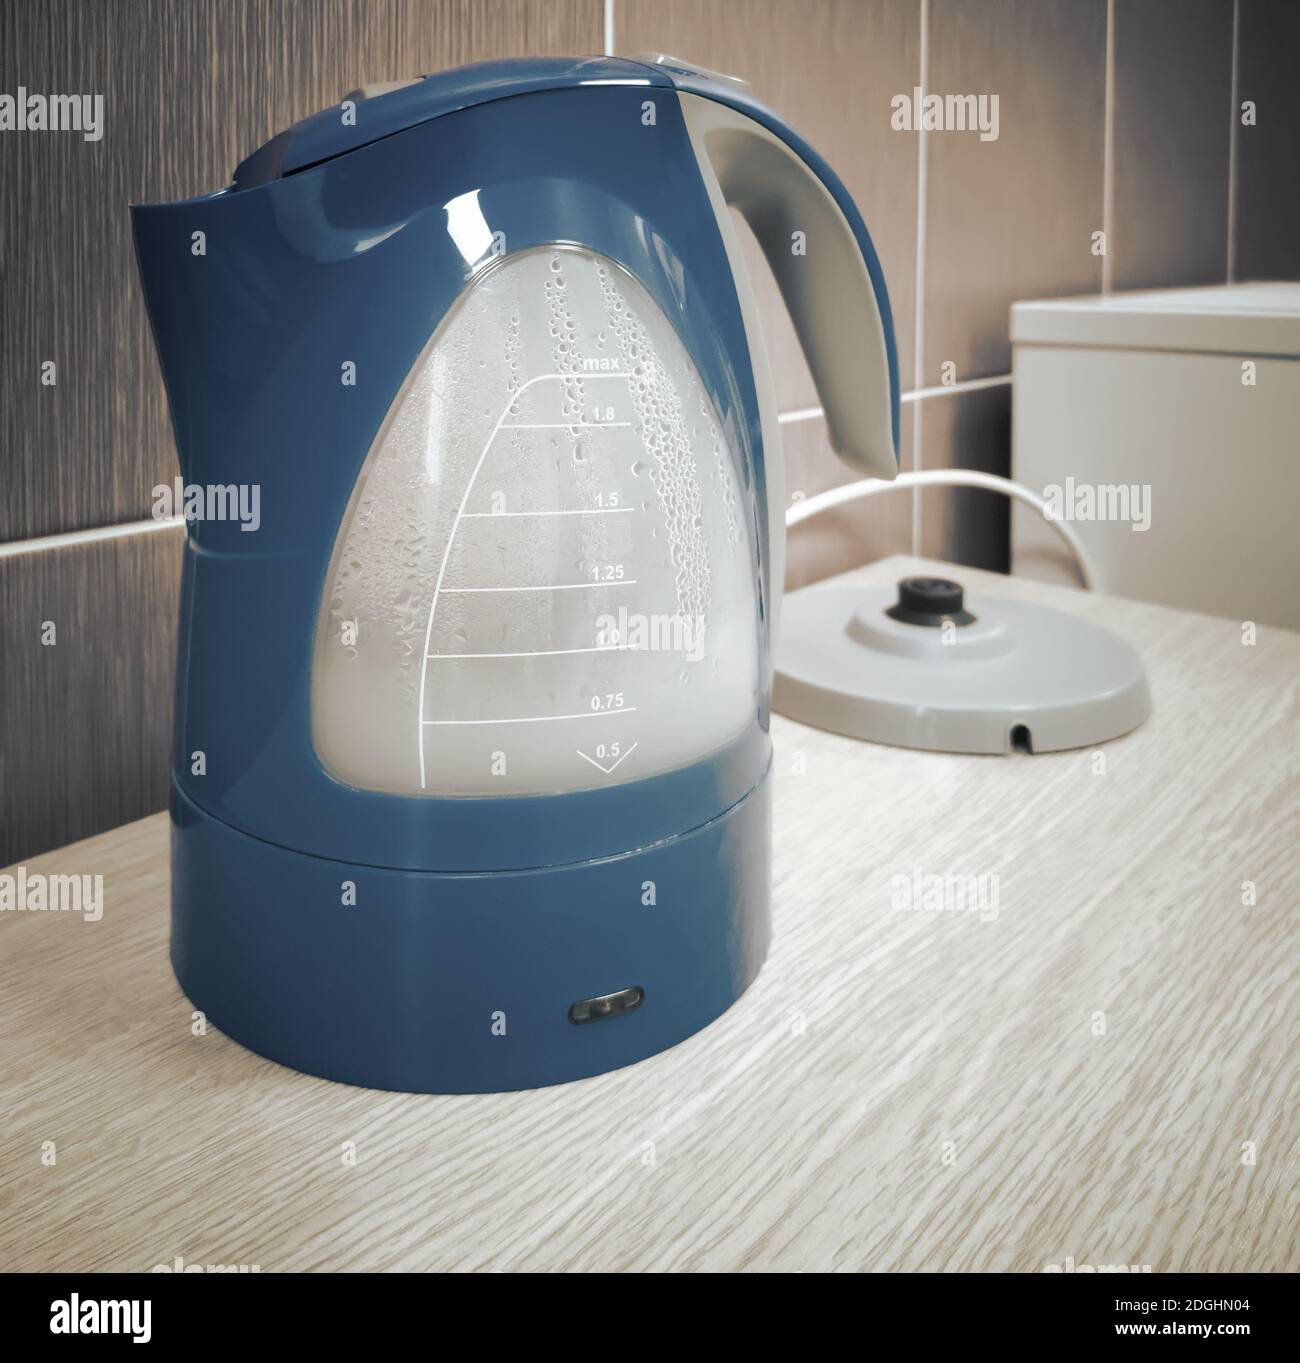 https://c8.alamy.com/comp/2DGHN04/modern-electric-kettle-on-the-kitchen-table-2DGHN04.jpg